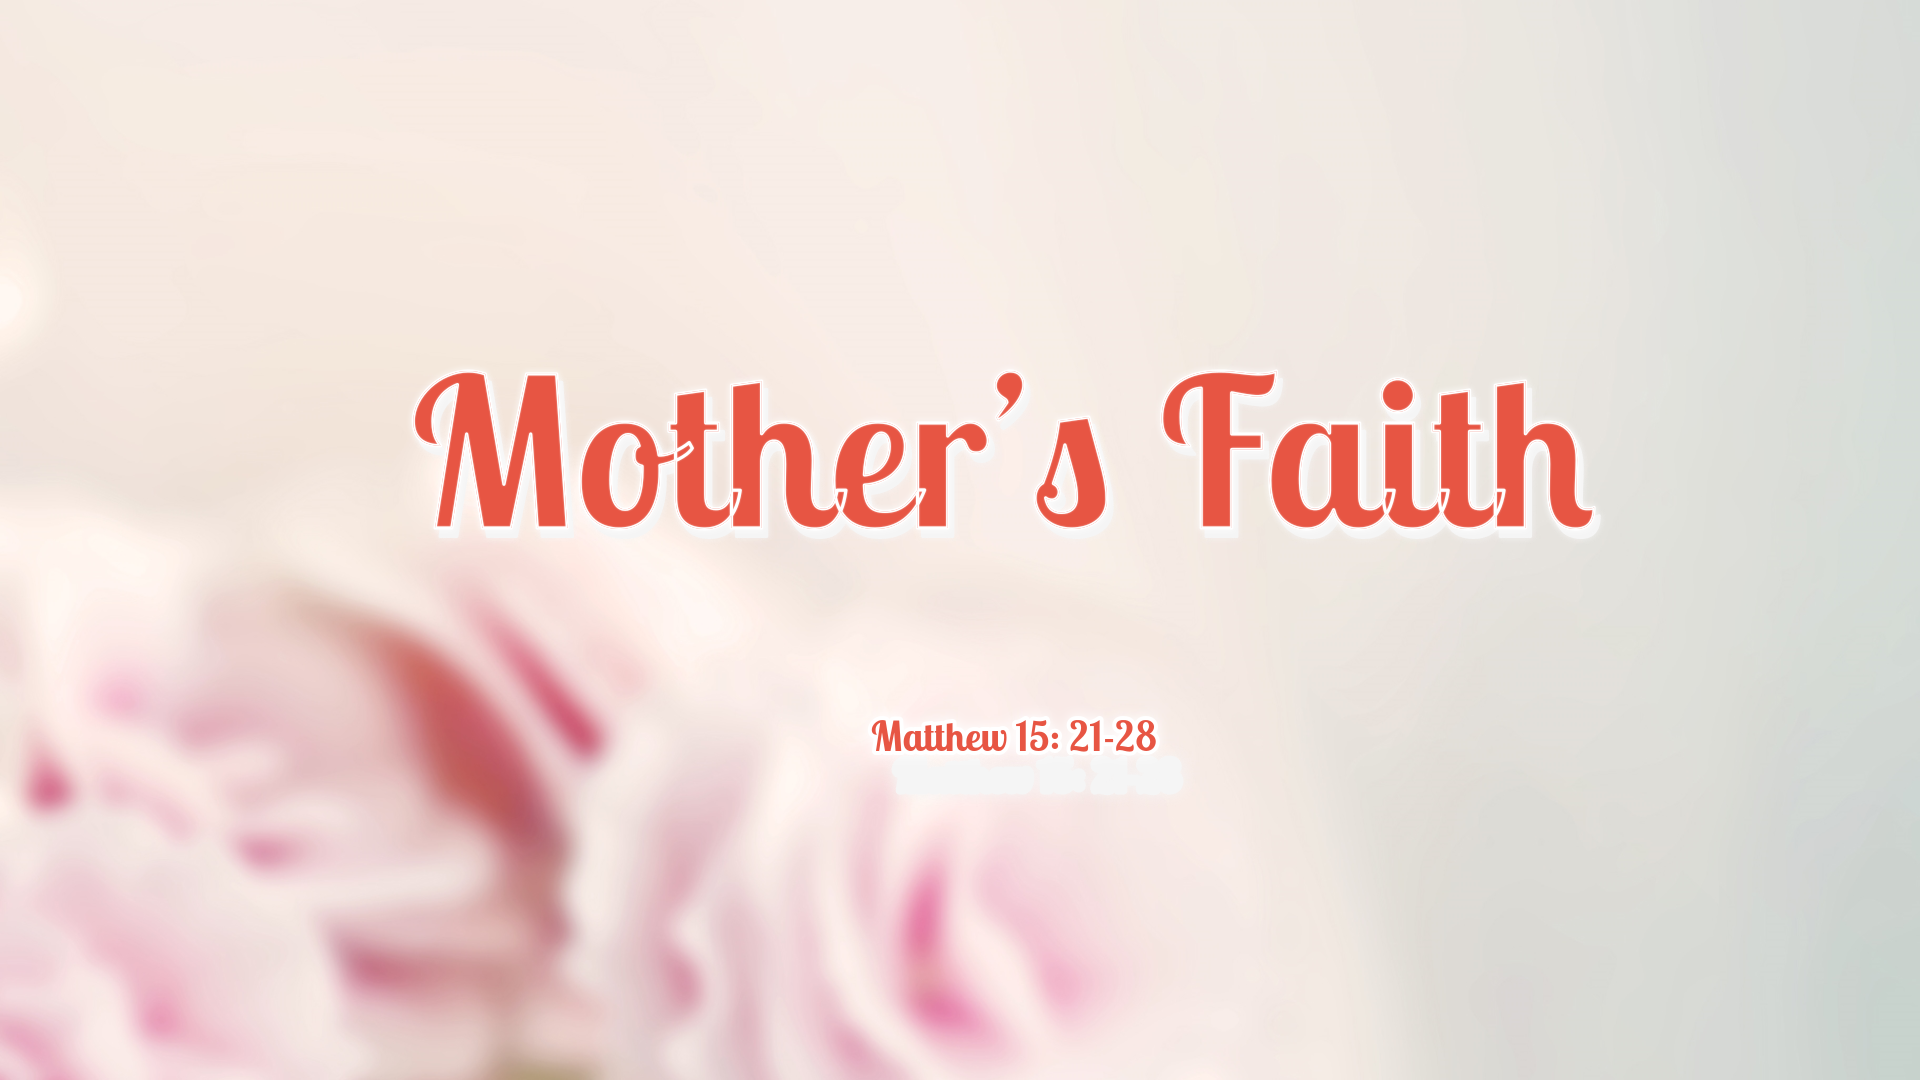 May 8, 2022 - Mother’s Faith (Video) Matthew 15: 21-28